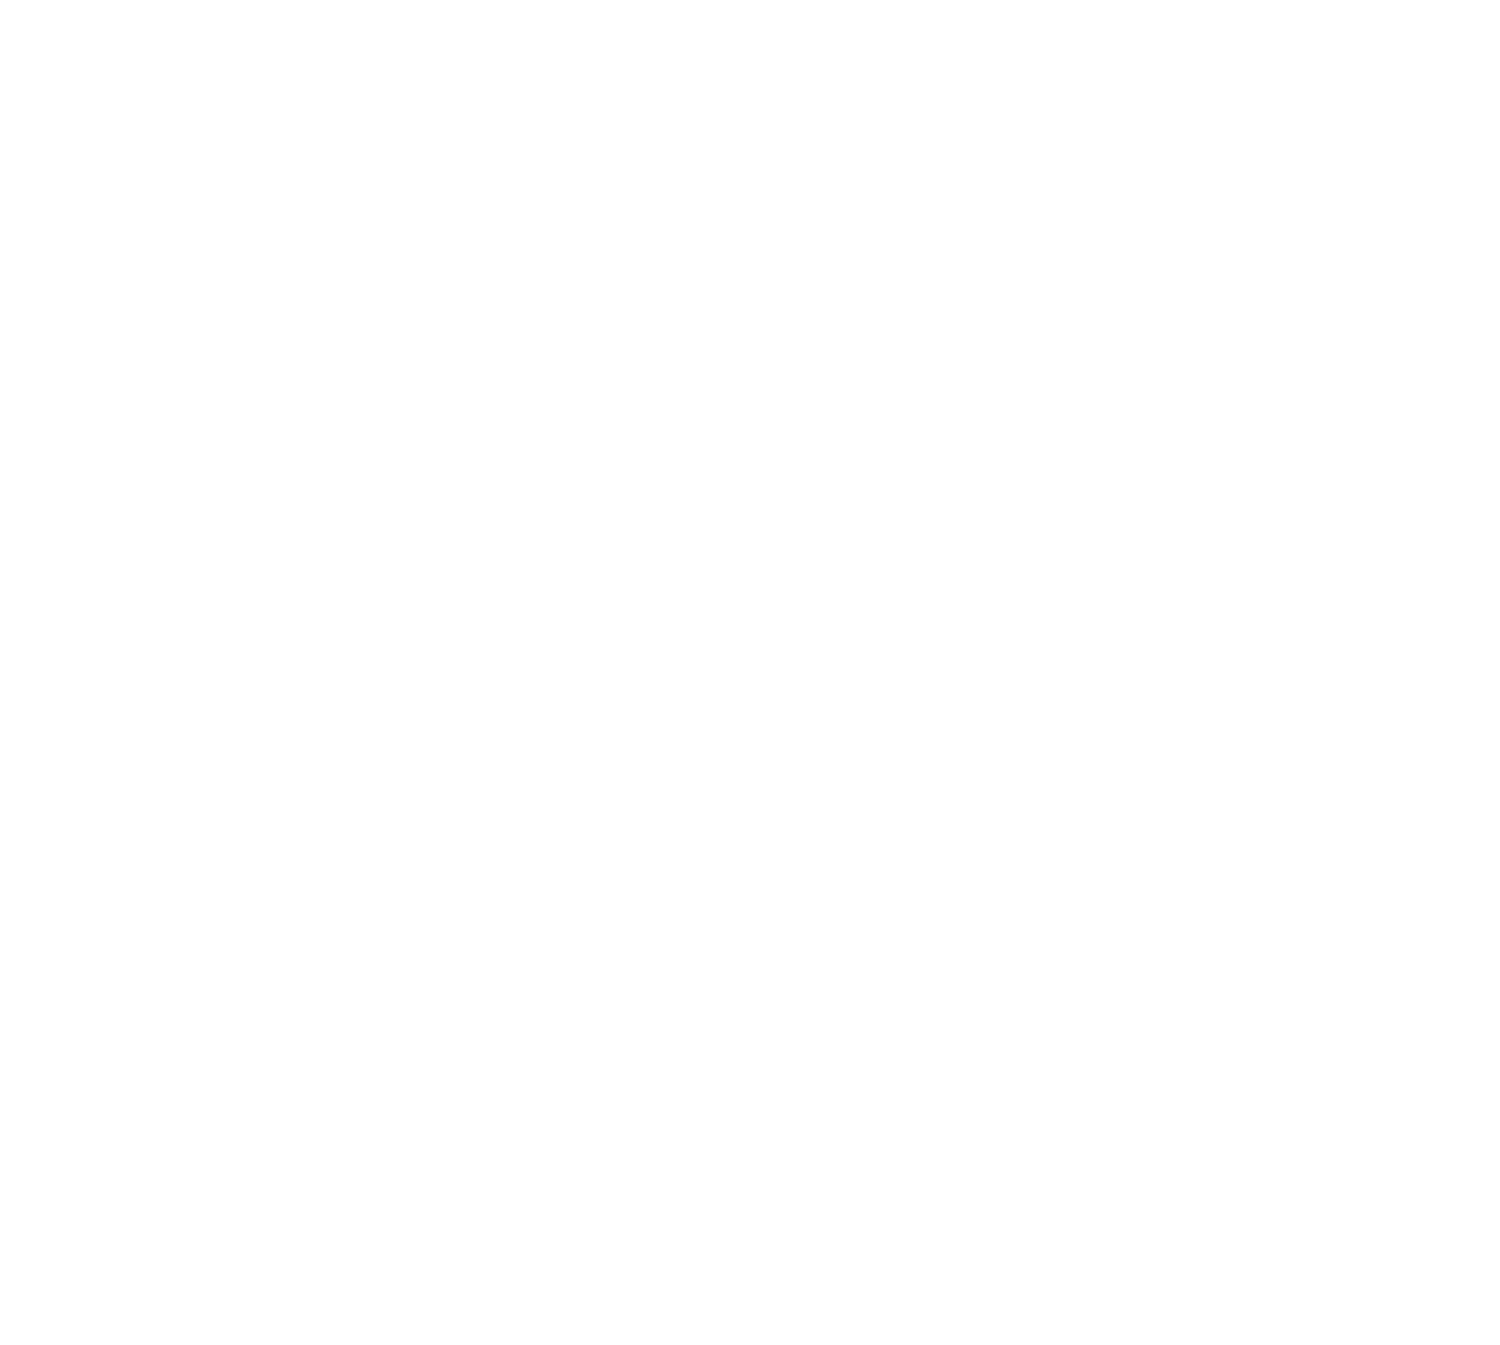 Very Clever Studios